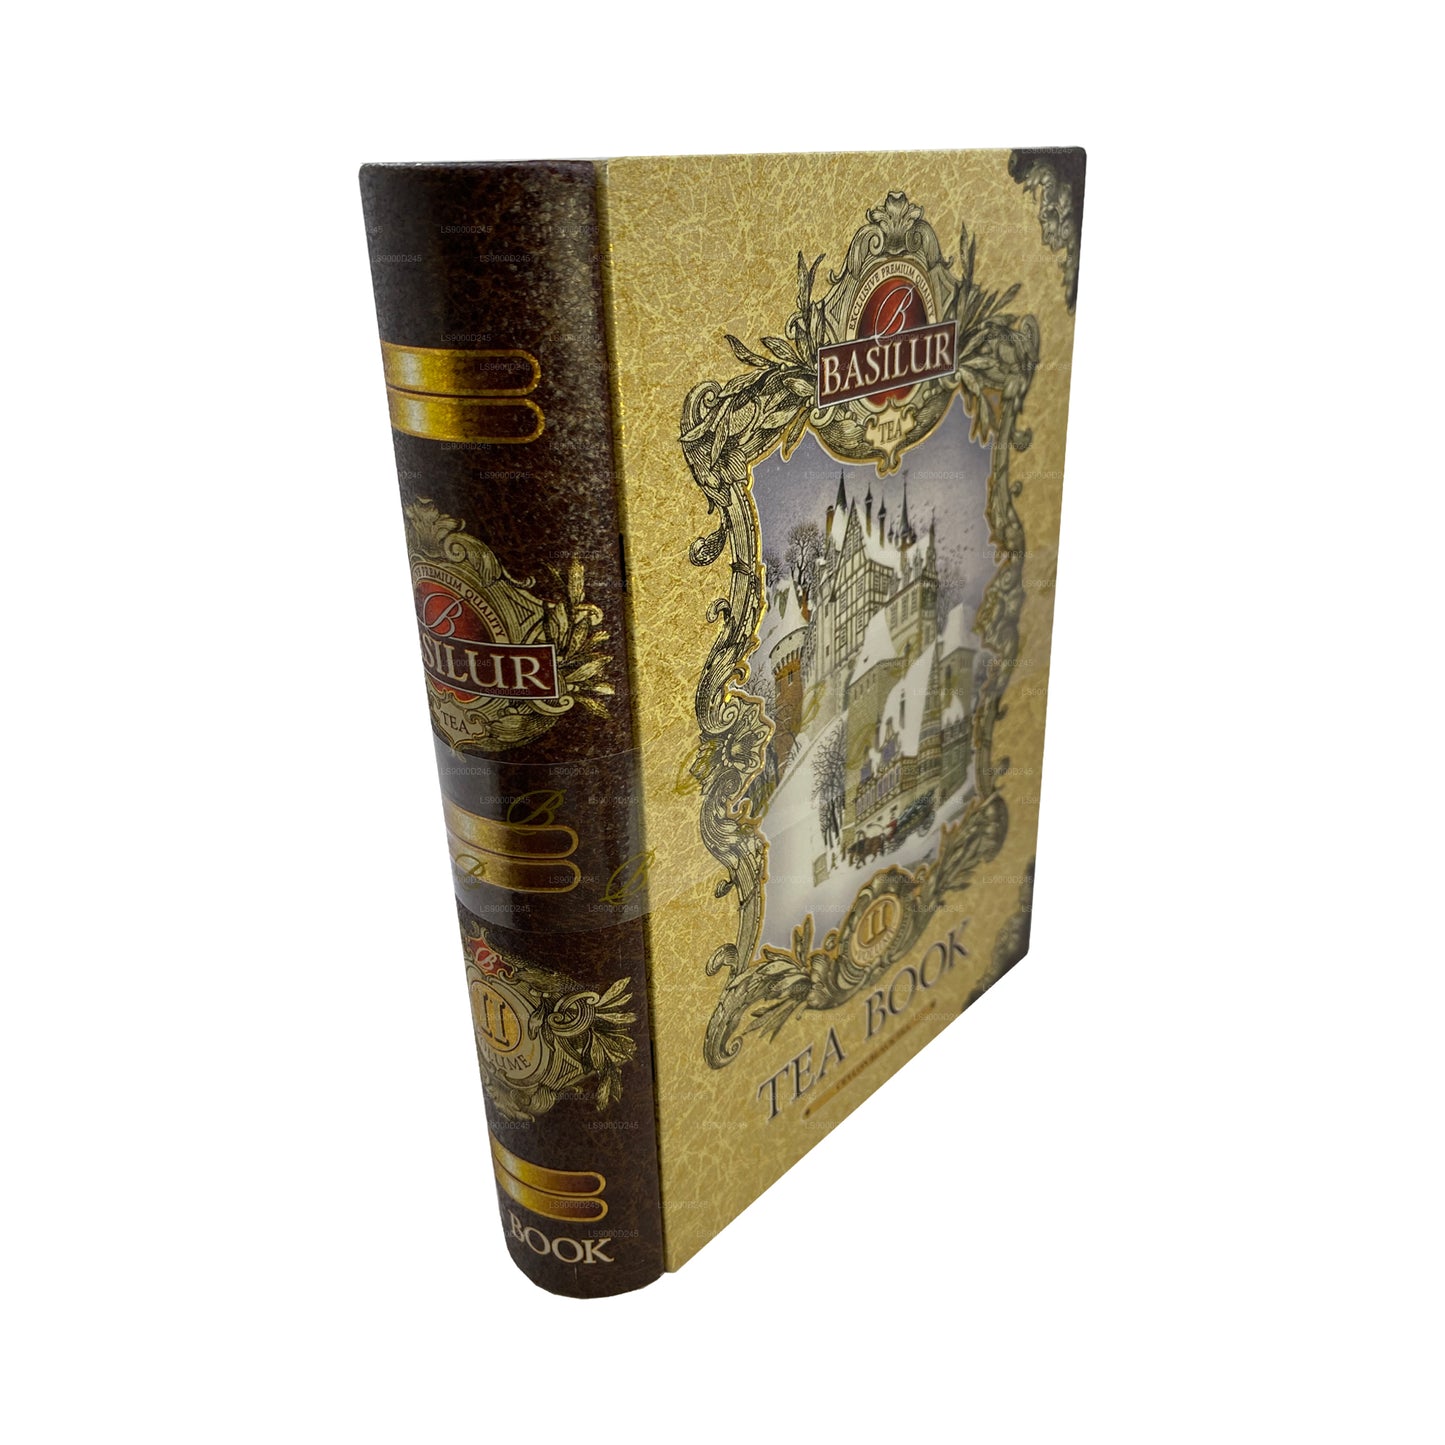 Basilur Teebuch-Behälter „Tea Book Volume II - Gold“ (100 g)